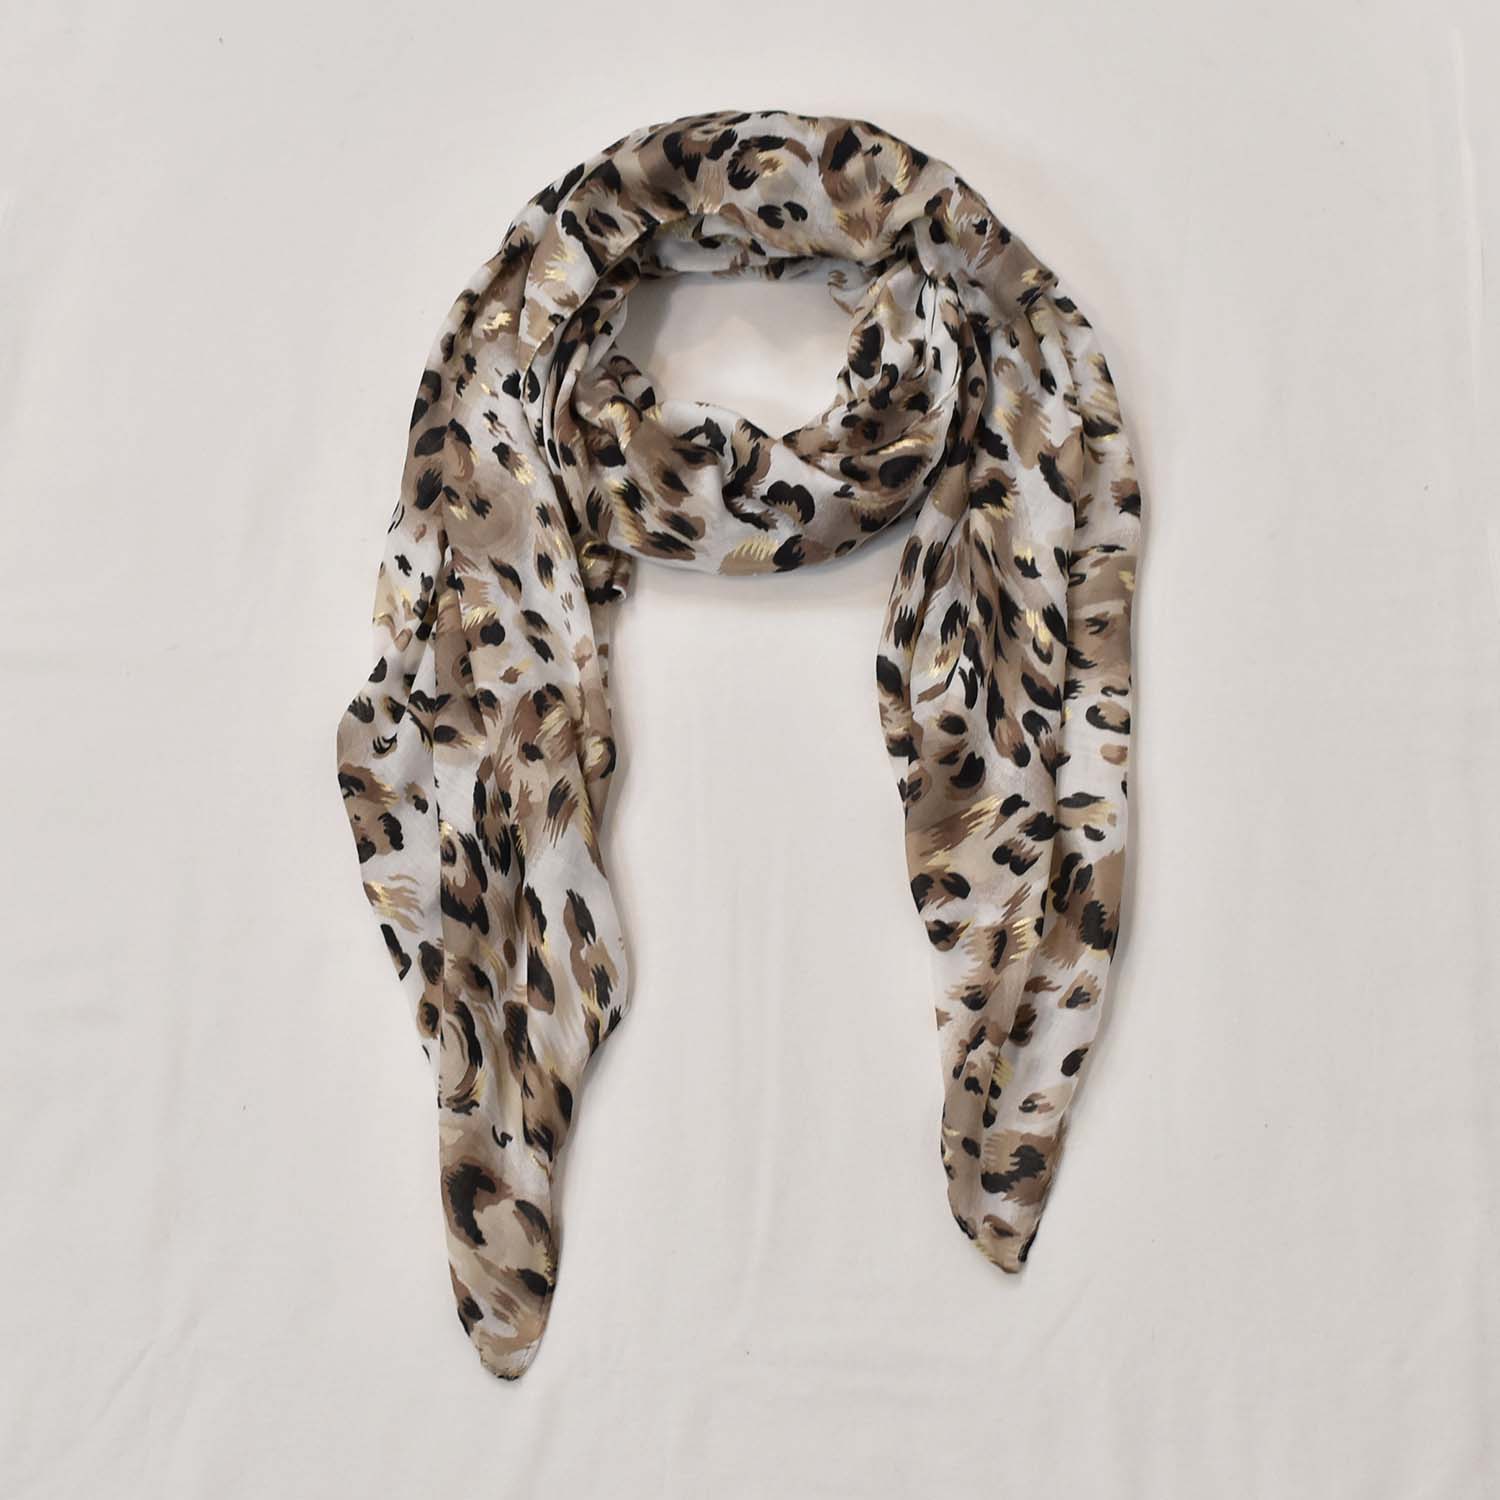 Fular leopardo brillo beige